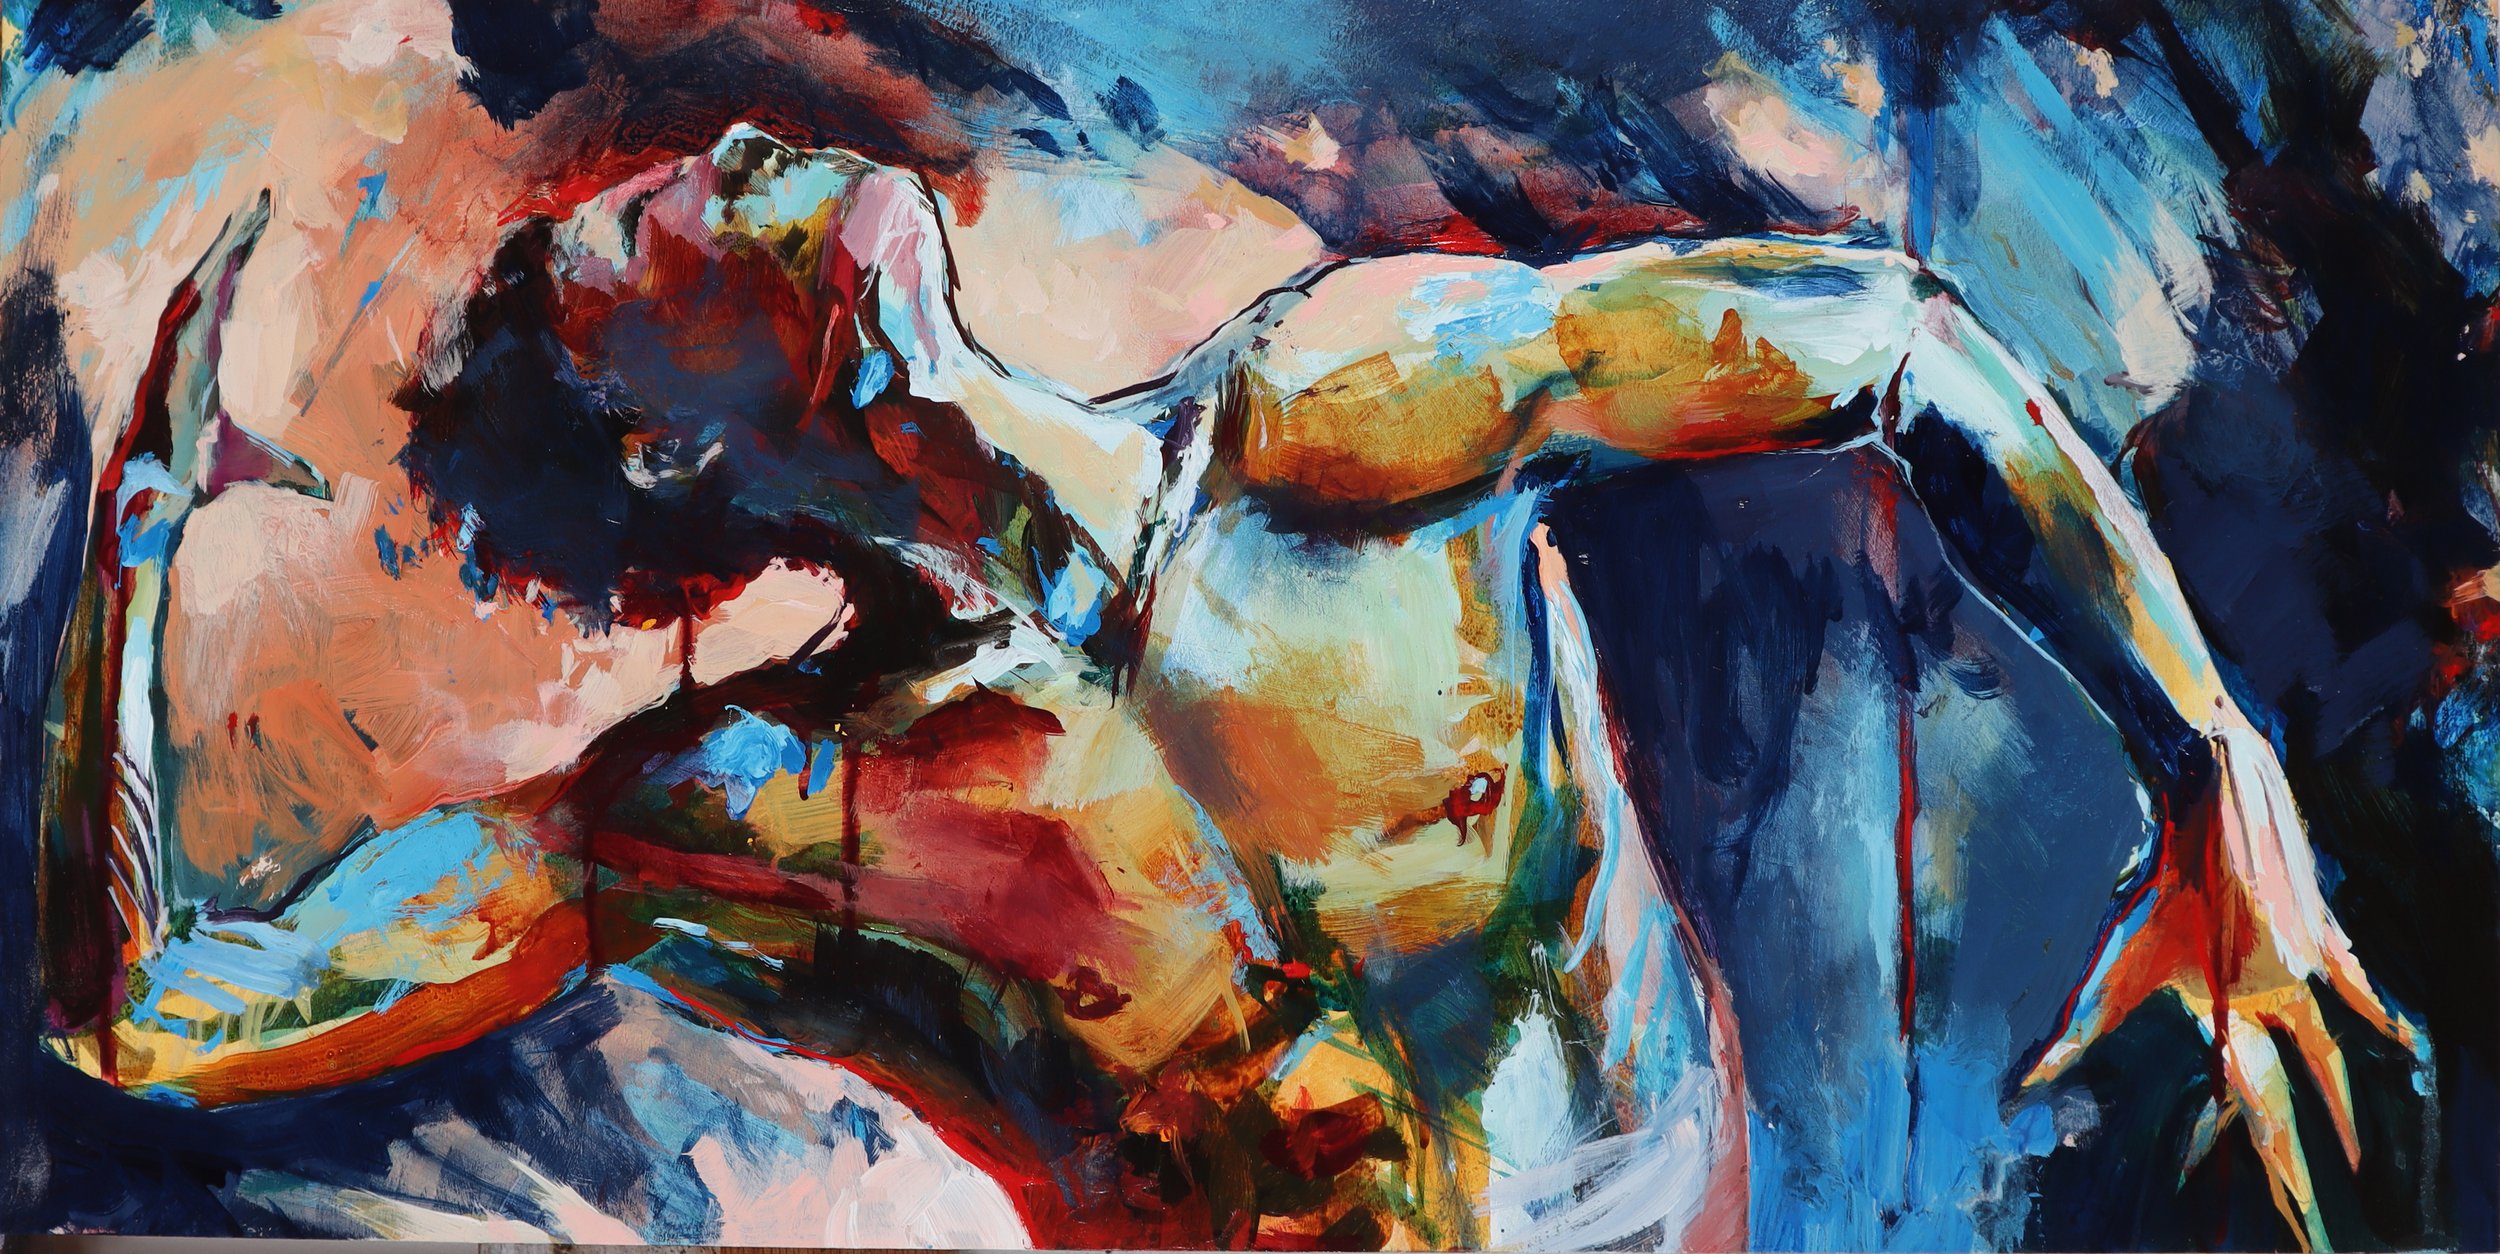   “Untitled Male Upper Body”   acrylic on birch panel  12x24in  ORIGINAL SOLD 